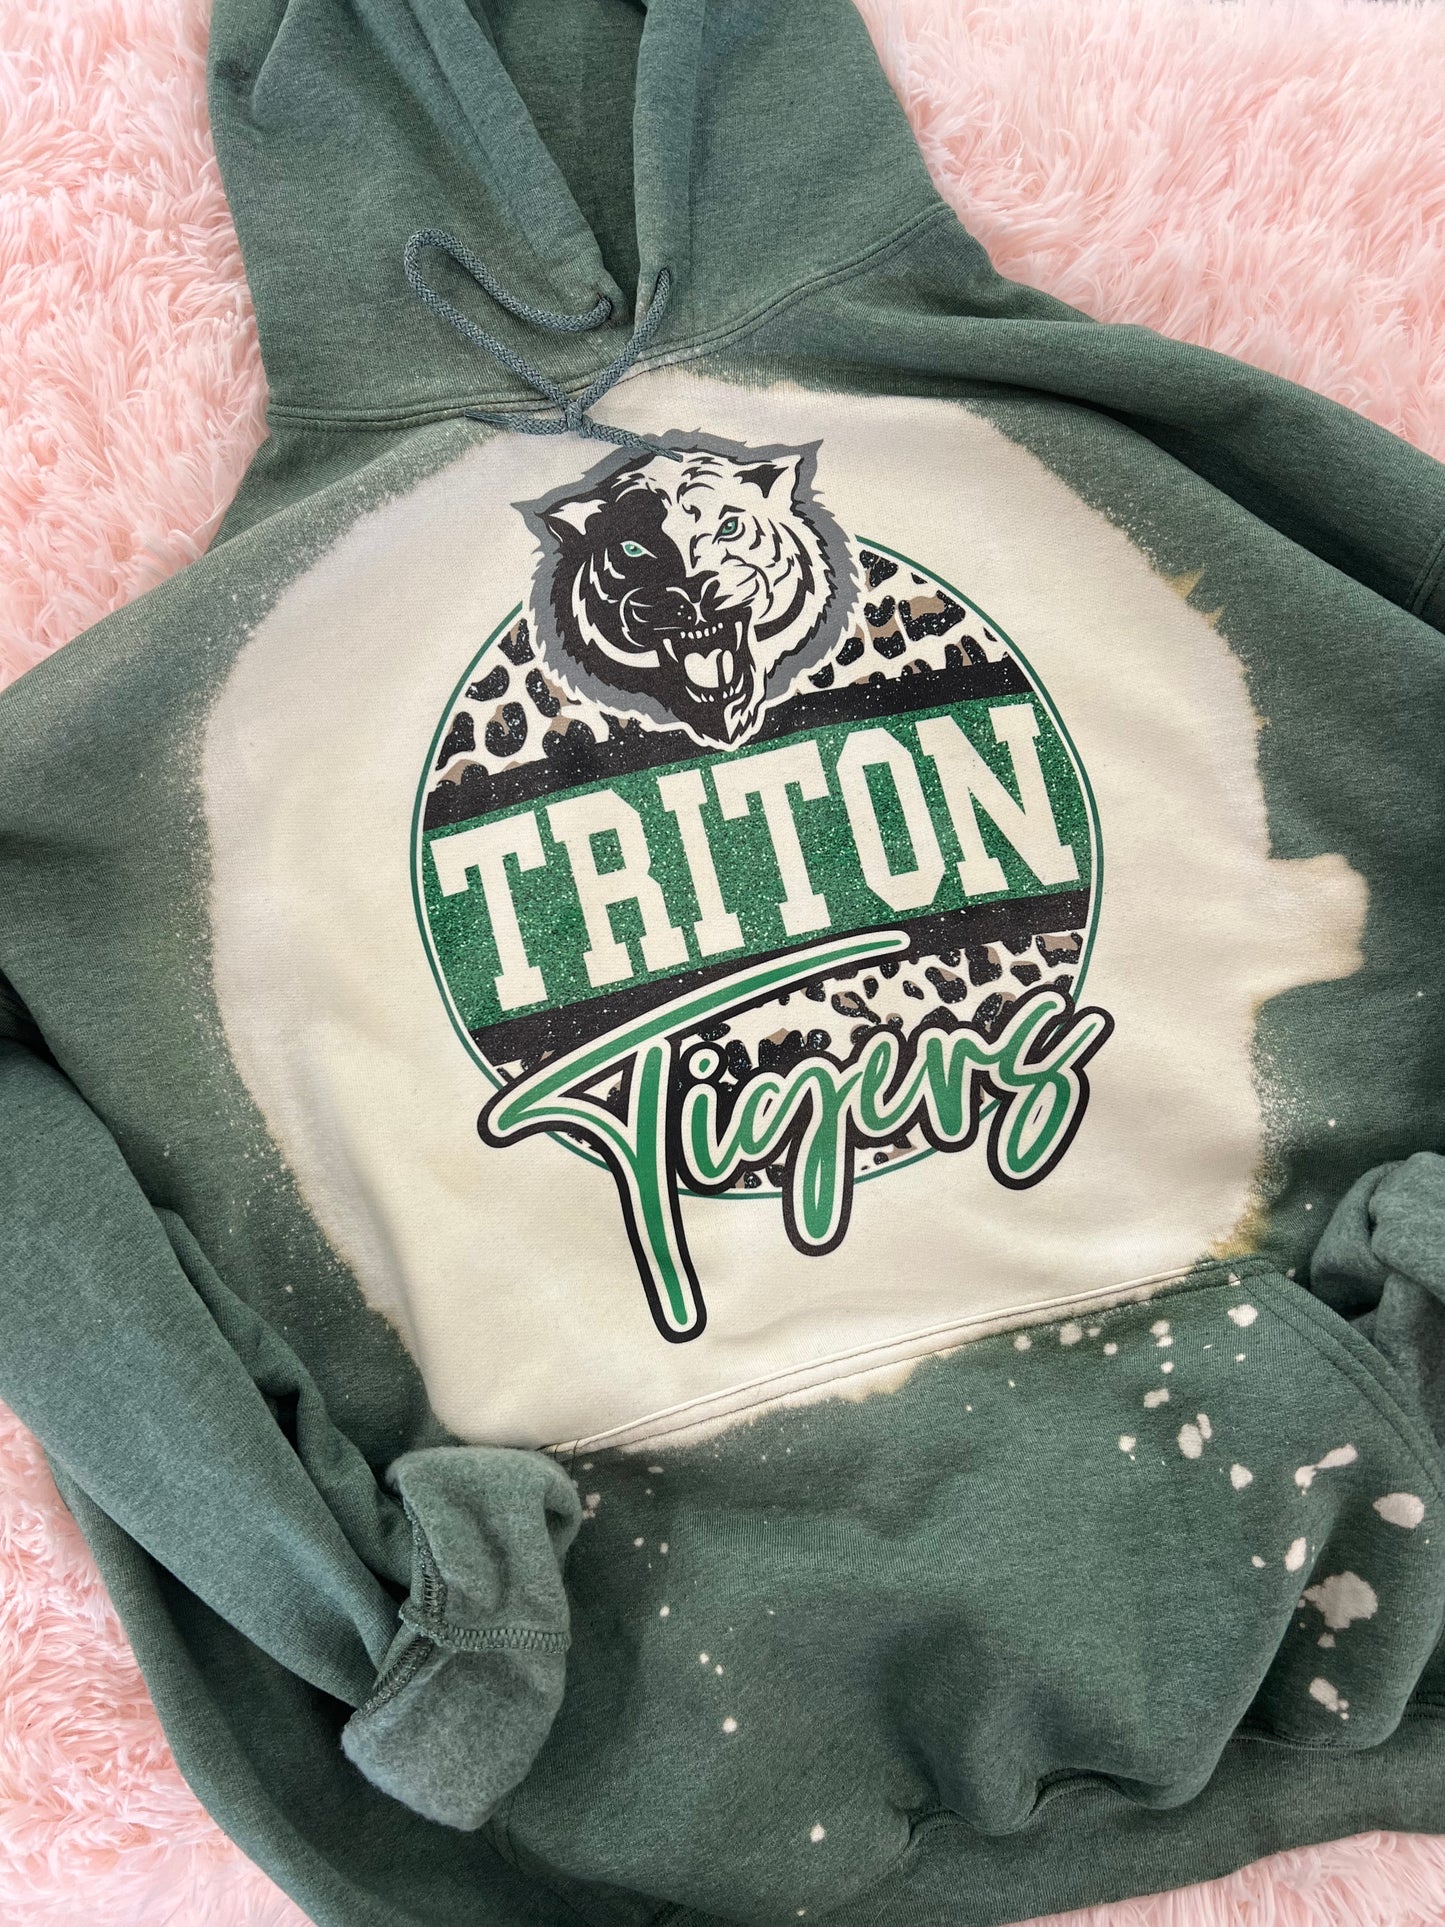 Triton tigers hoodie